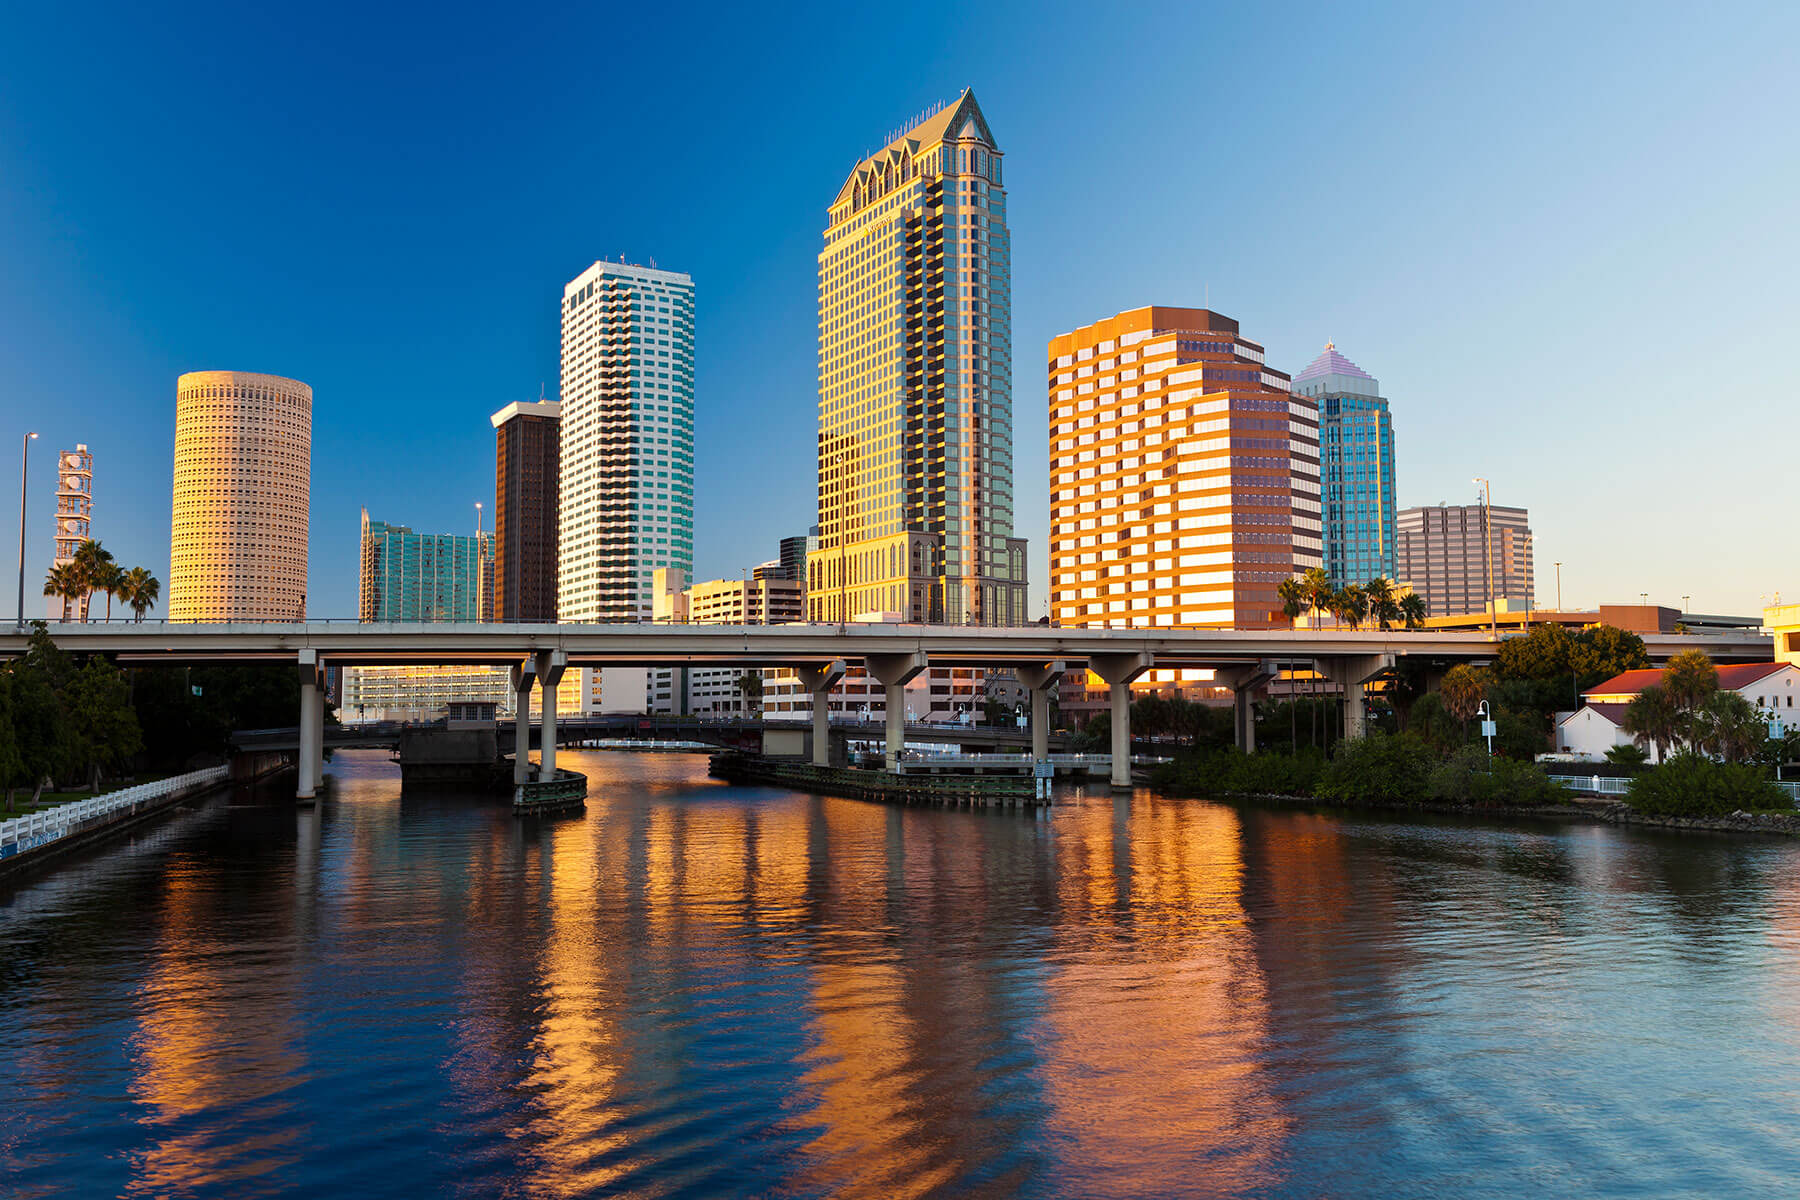 Tampa, Florida city photo across a lake